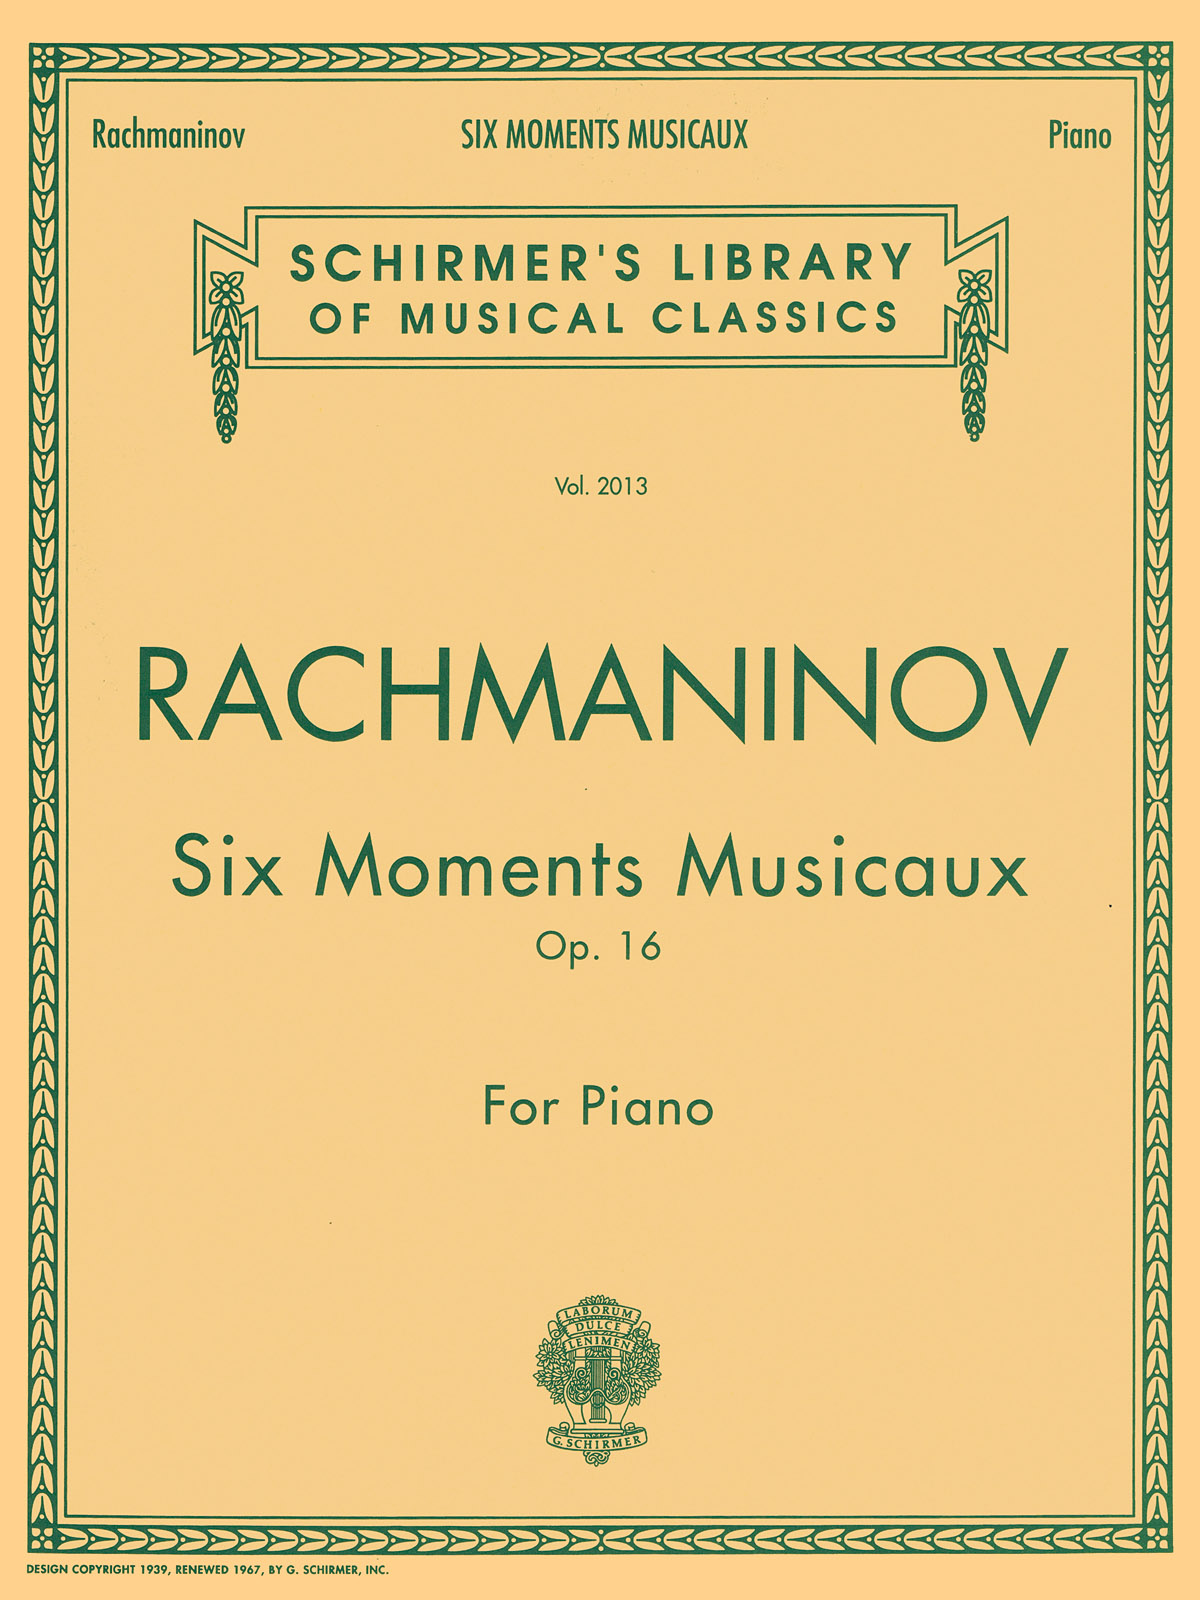 Rachmaninoff: Six Moments Musicaux, Op. 16